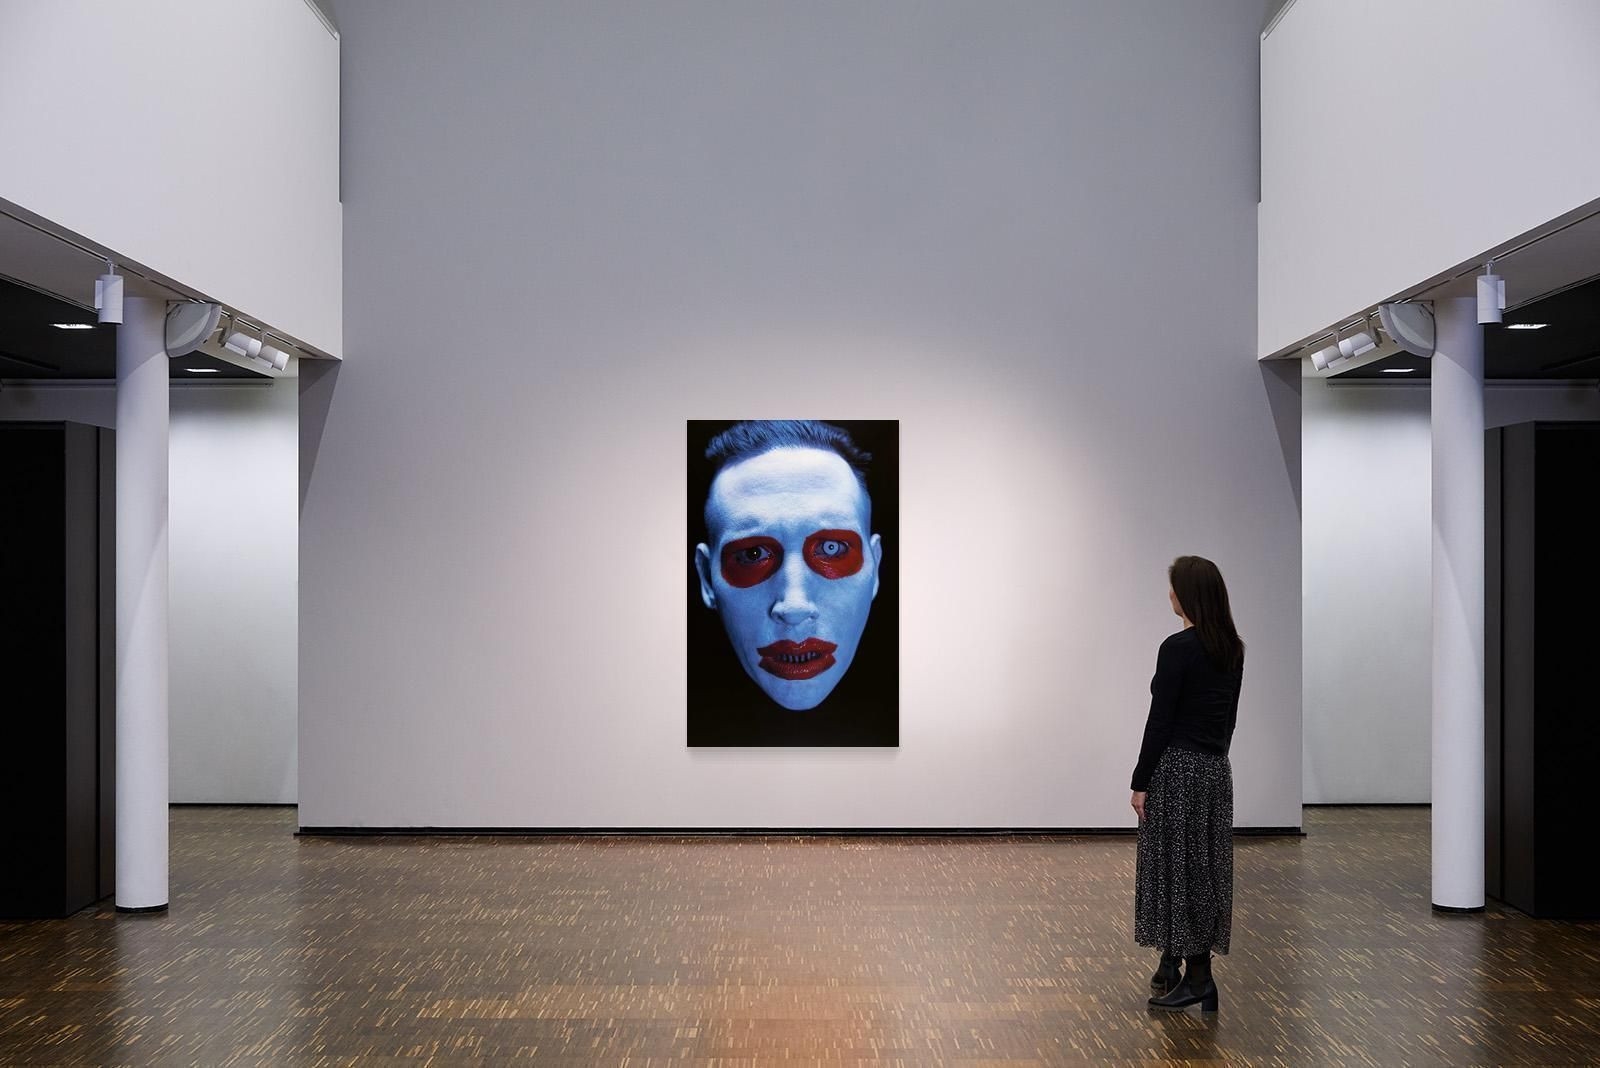 Artwork by Gottfried Helnwein, The Golden Age 37 (Marilyn Manson)., Made of Carbon print on vinyl